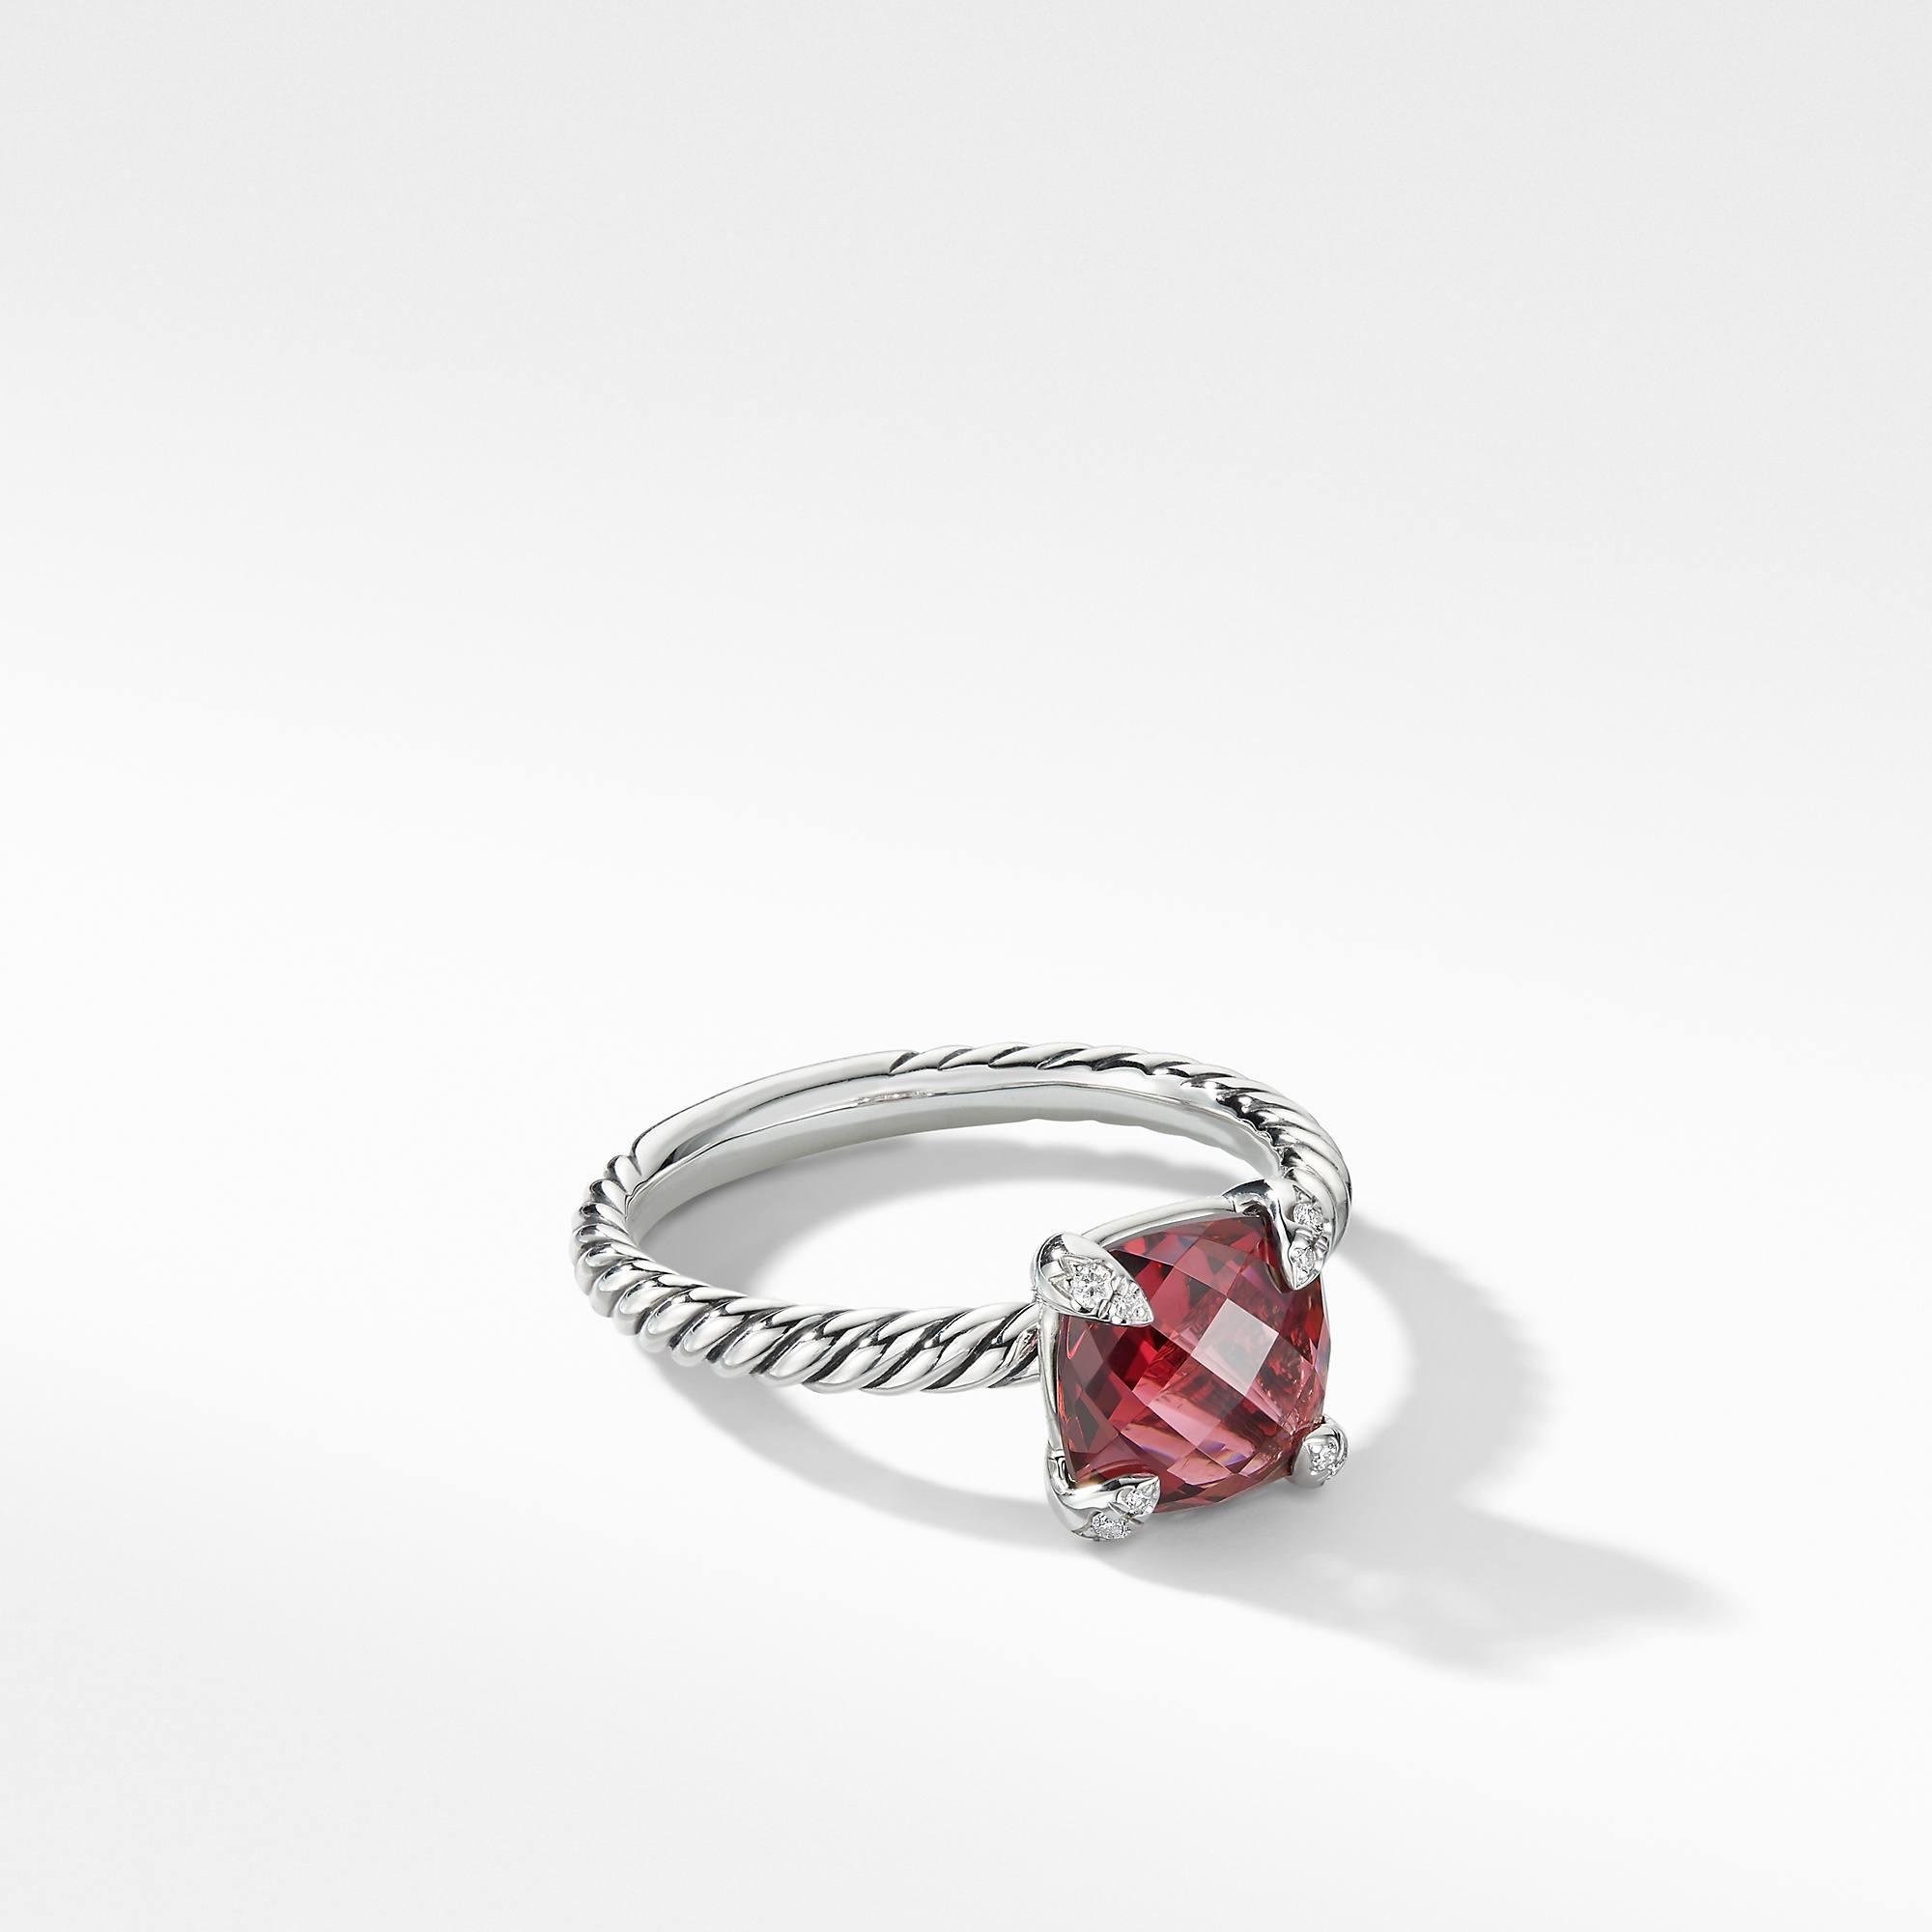 David Yurman Chatelaine Ring with Rhodalite Garnet and Diamonds, size 6.5